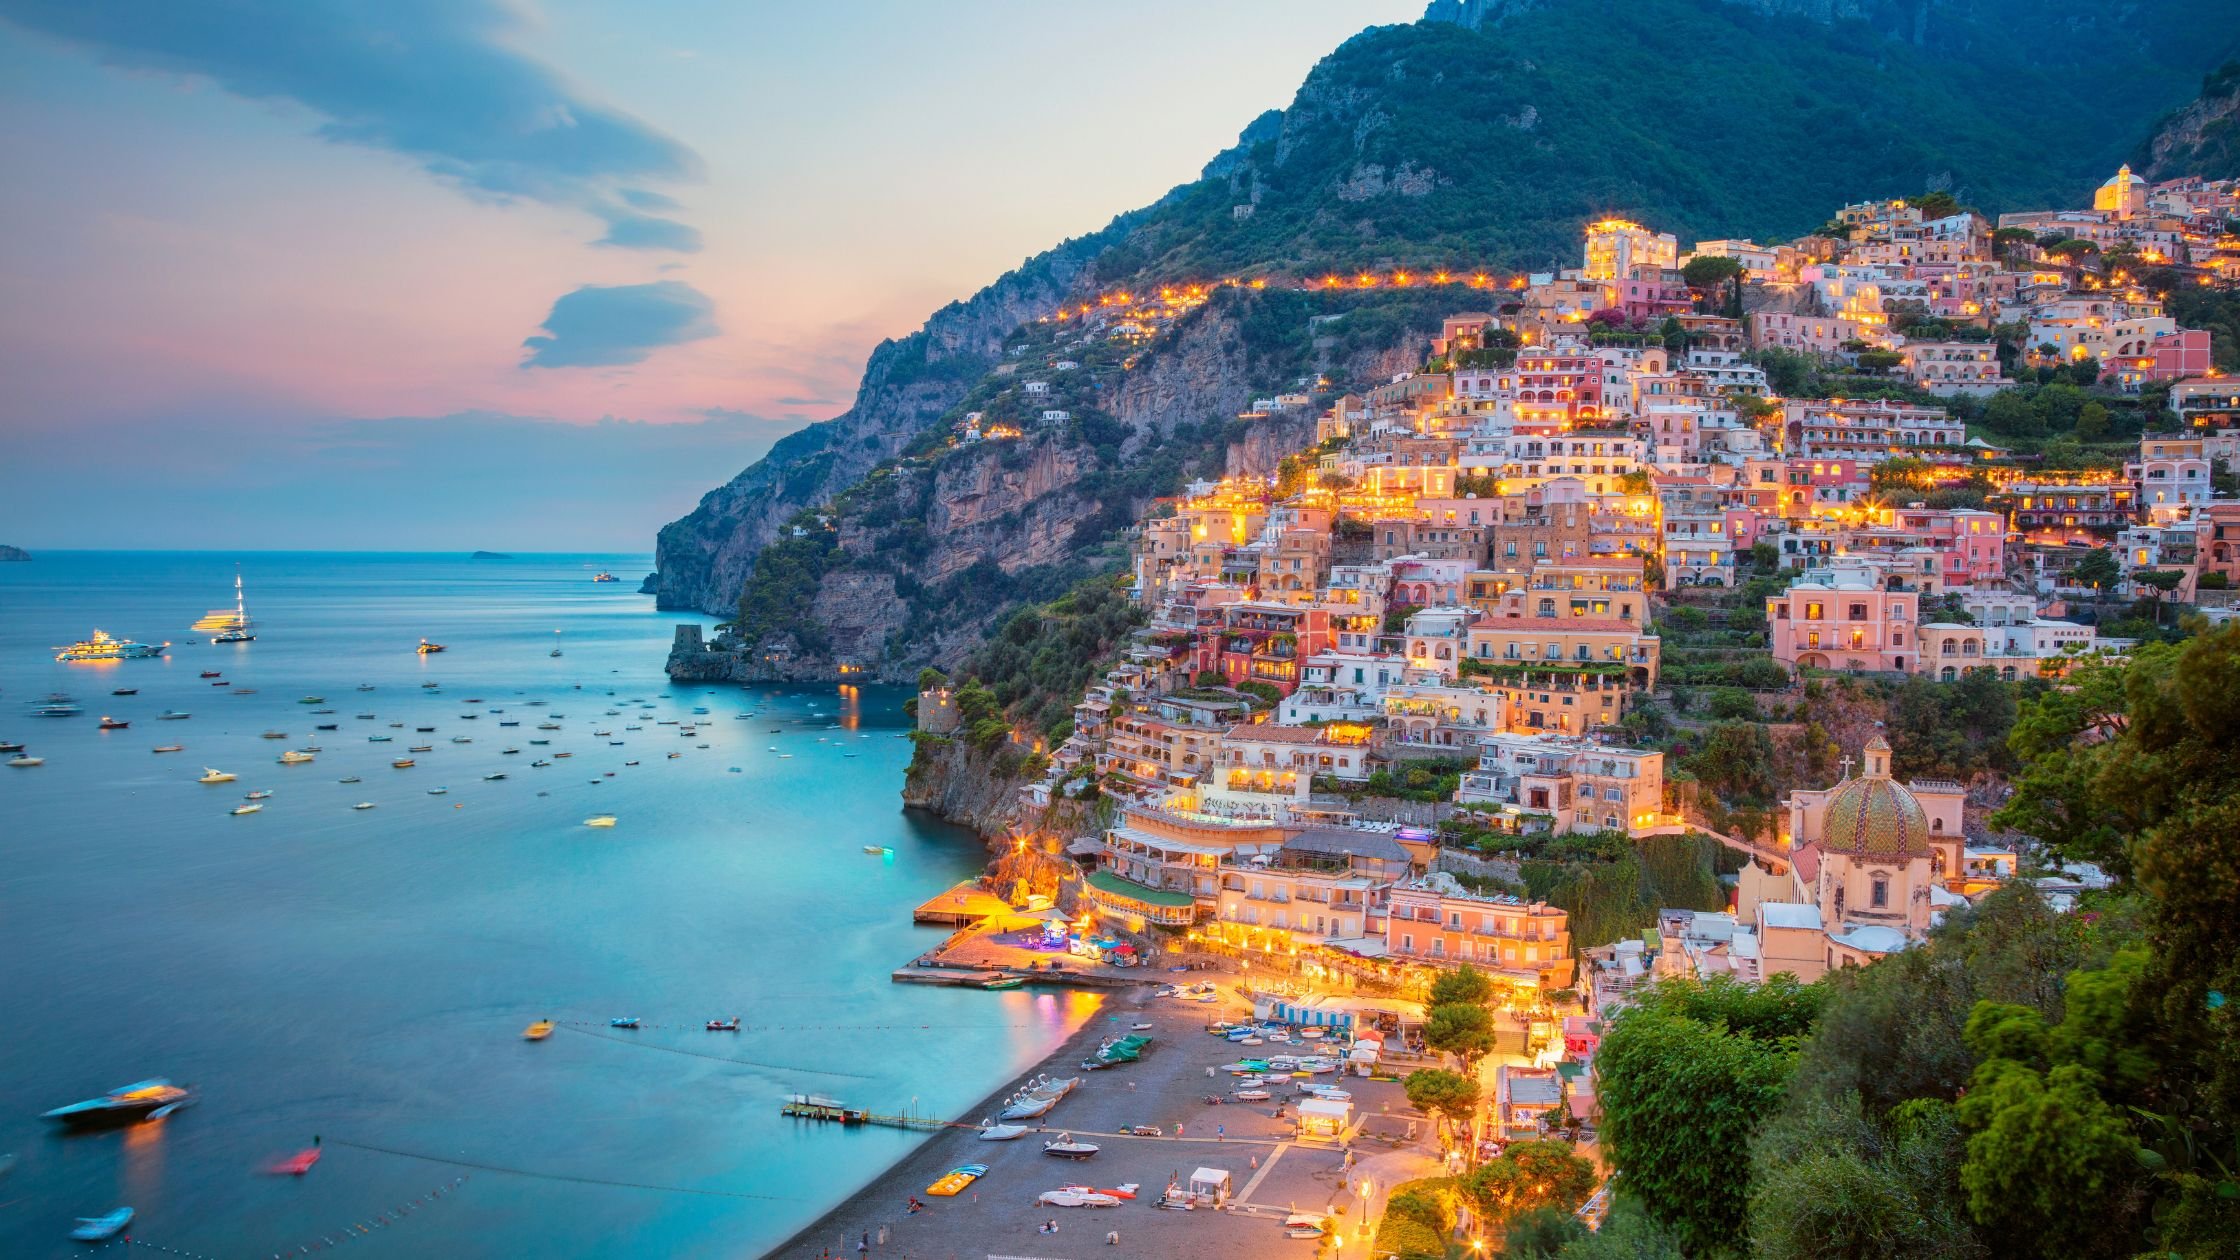 The Amalfi Coast is a 50 km stretch of the southern coast of the Sorrentine Peninsula